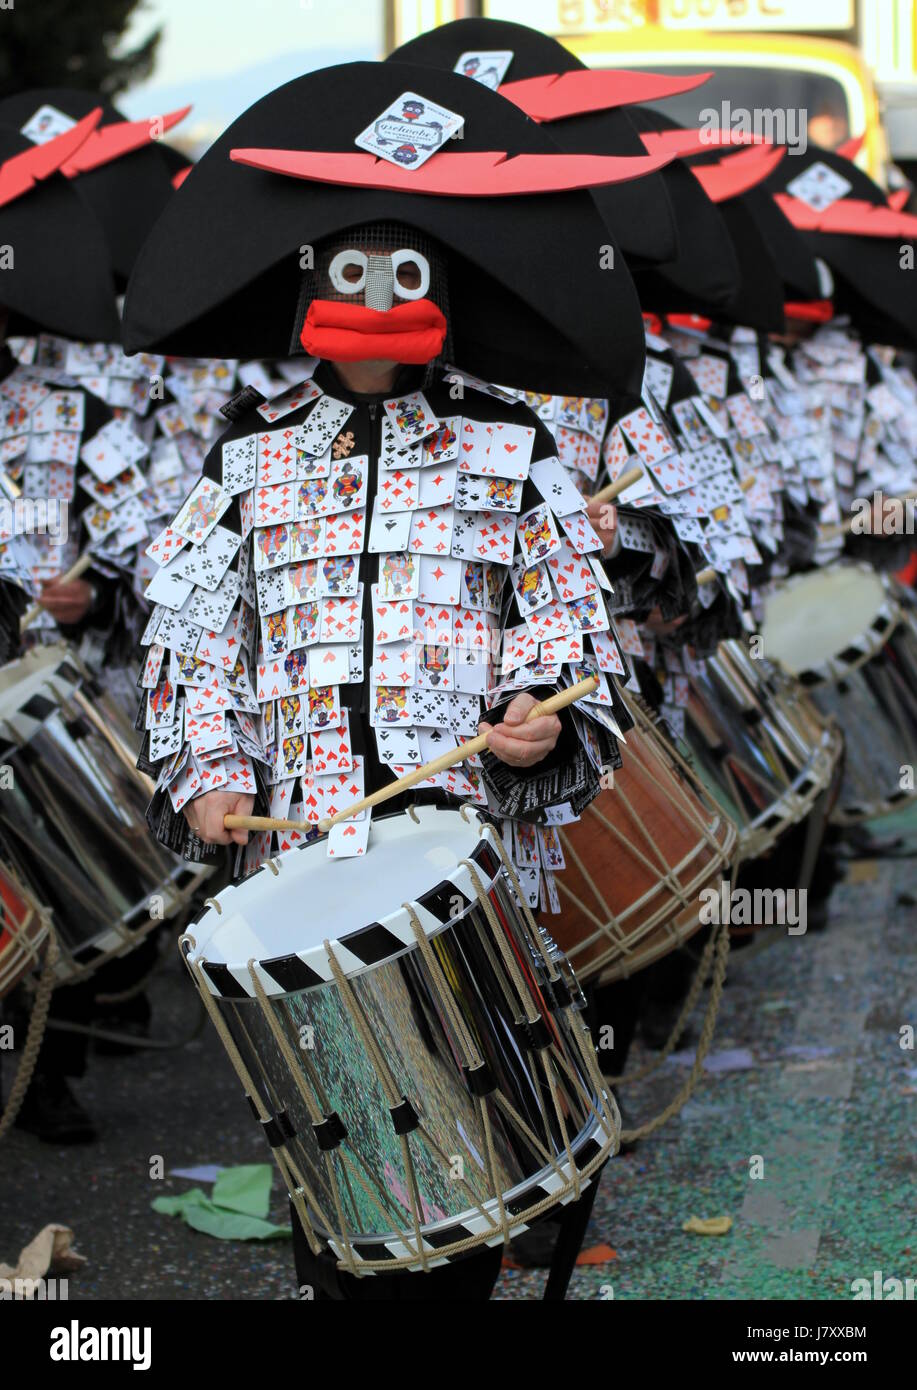 Karneval Percussion Schlagzeuger Schlagzeug Maske Hand Hände Finger Musik  musical Stockfotografie - Alamy